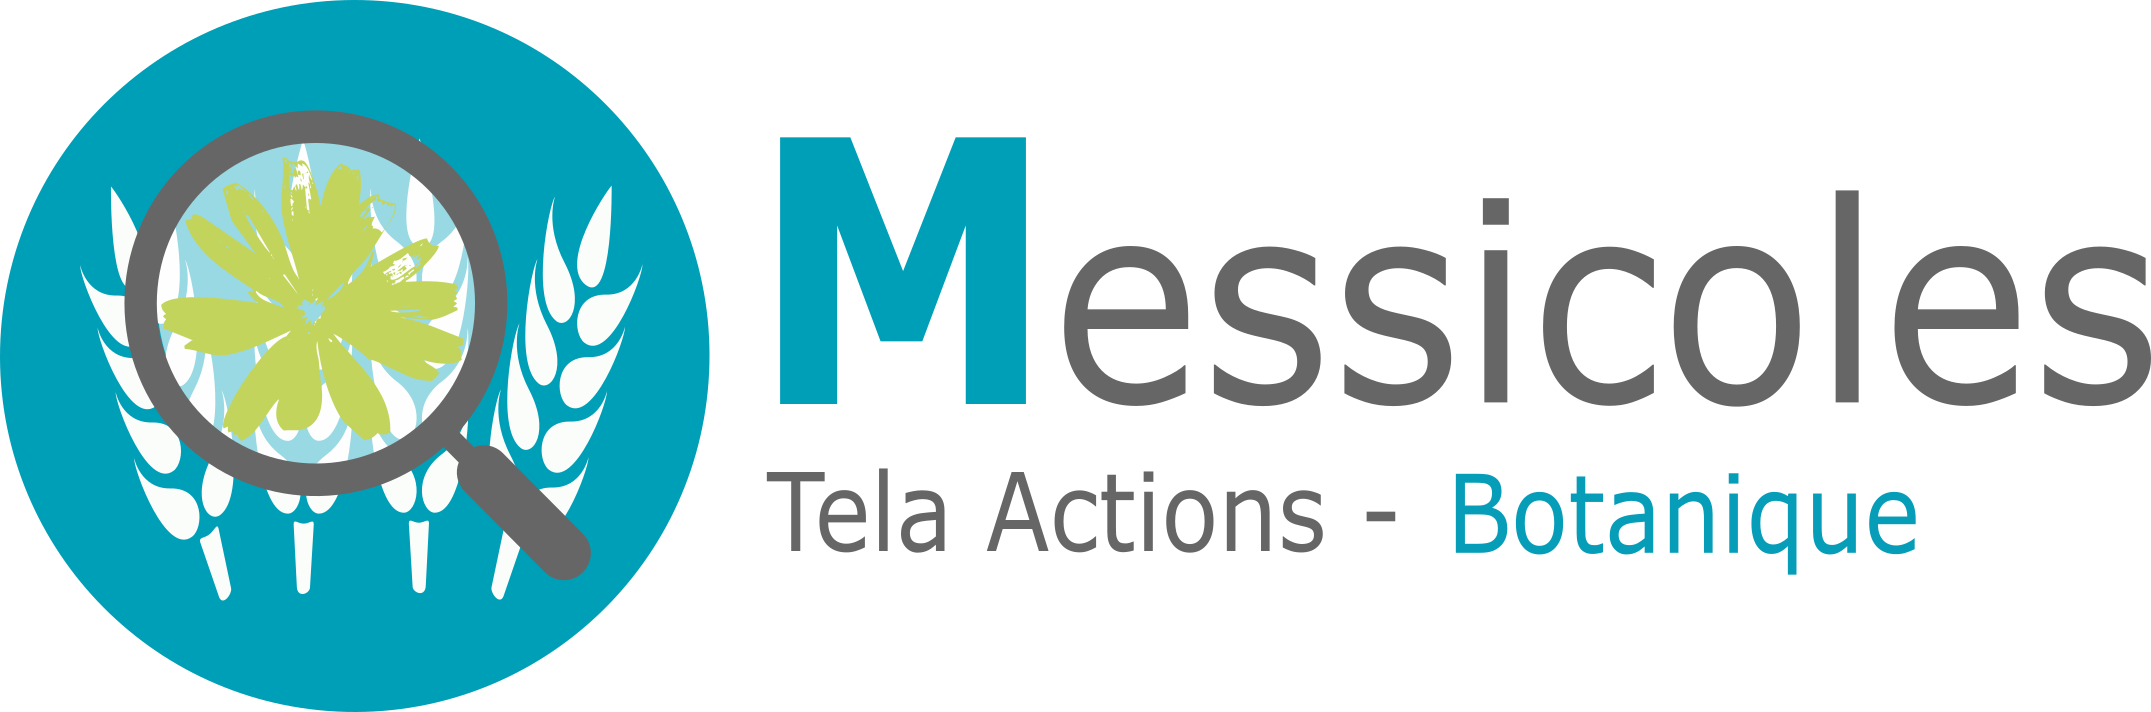 logo Tela Action messicoles